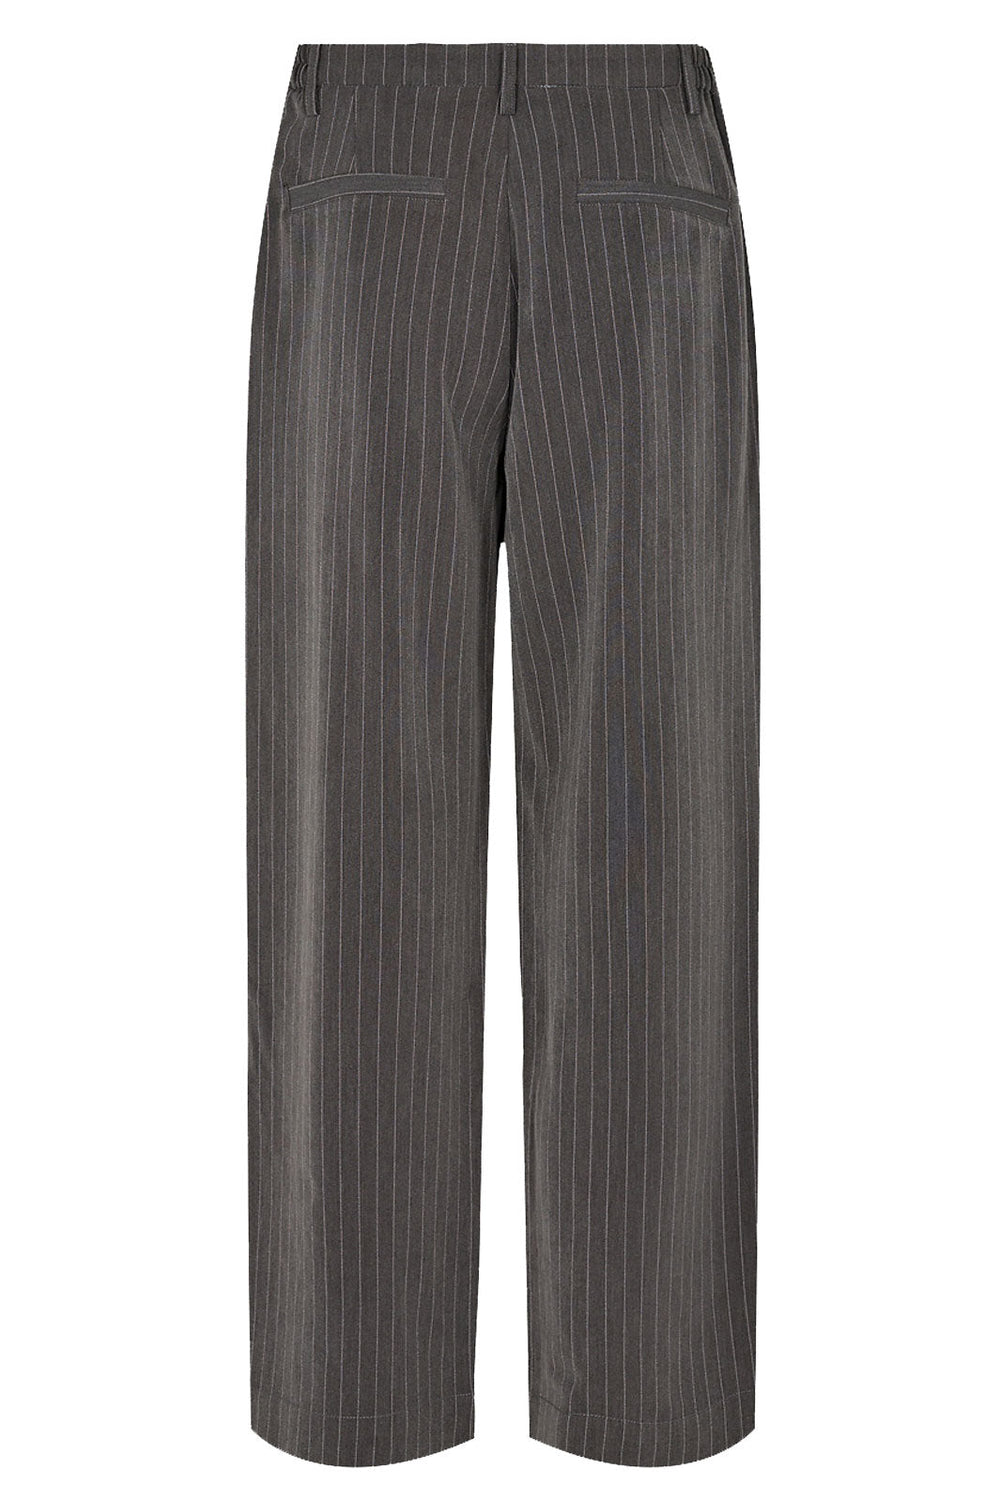 Moves by Minimum - Hamasti Pants - Grey stripe Bukser 